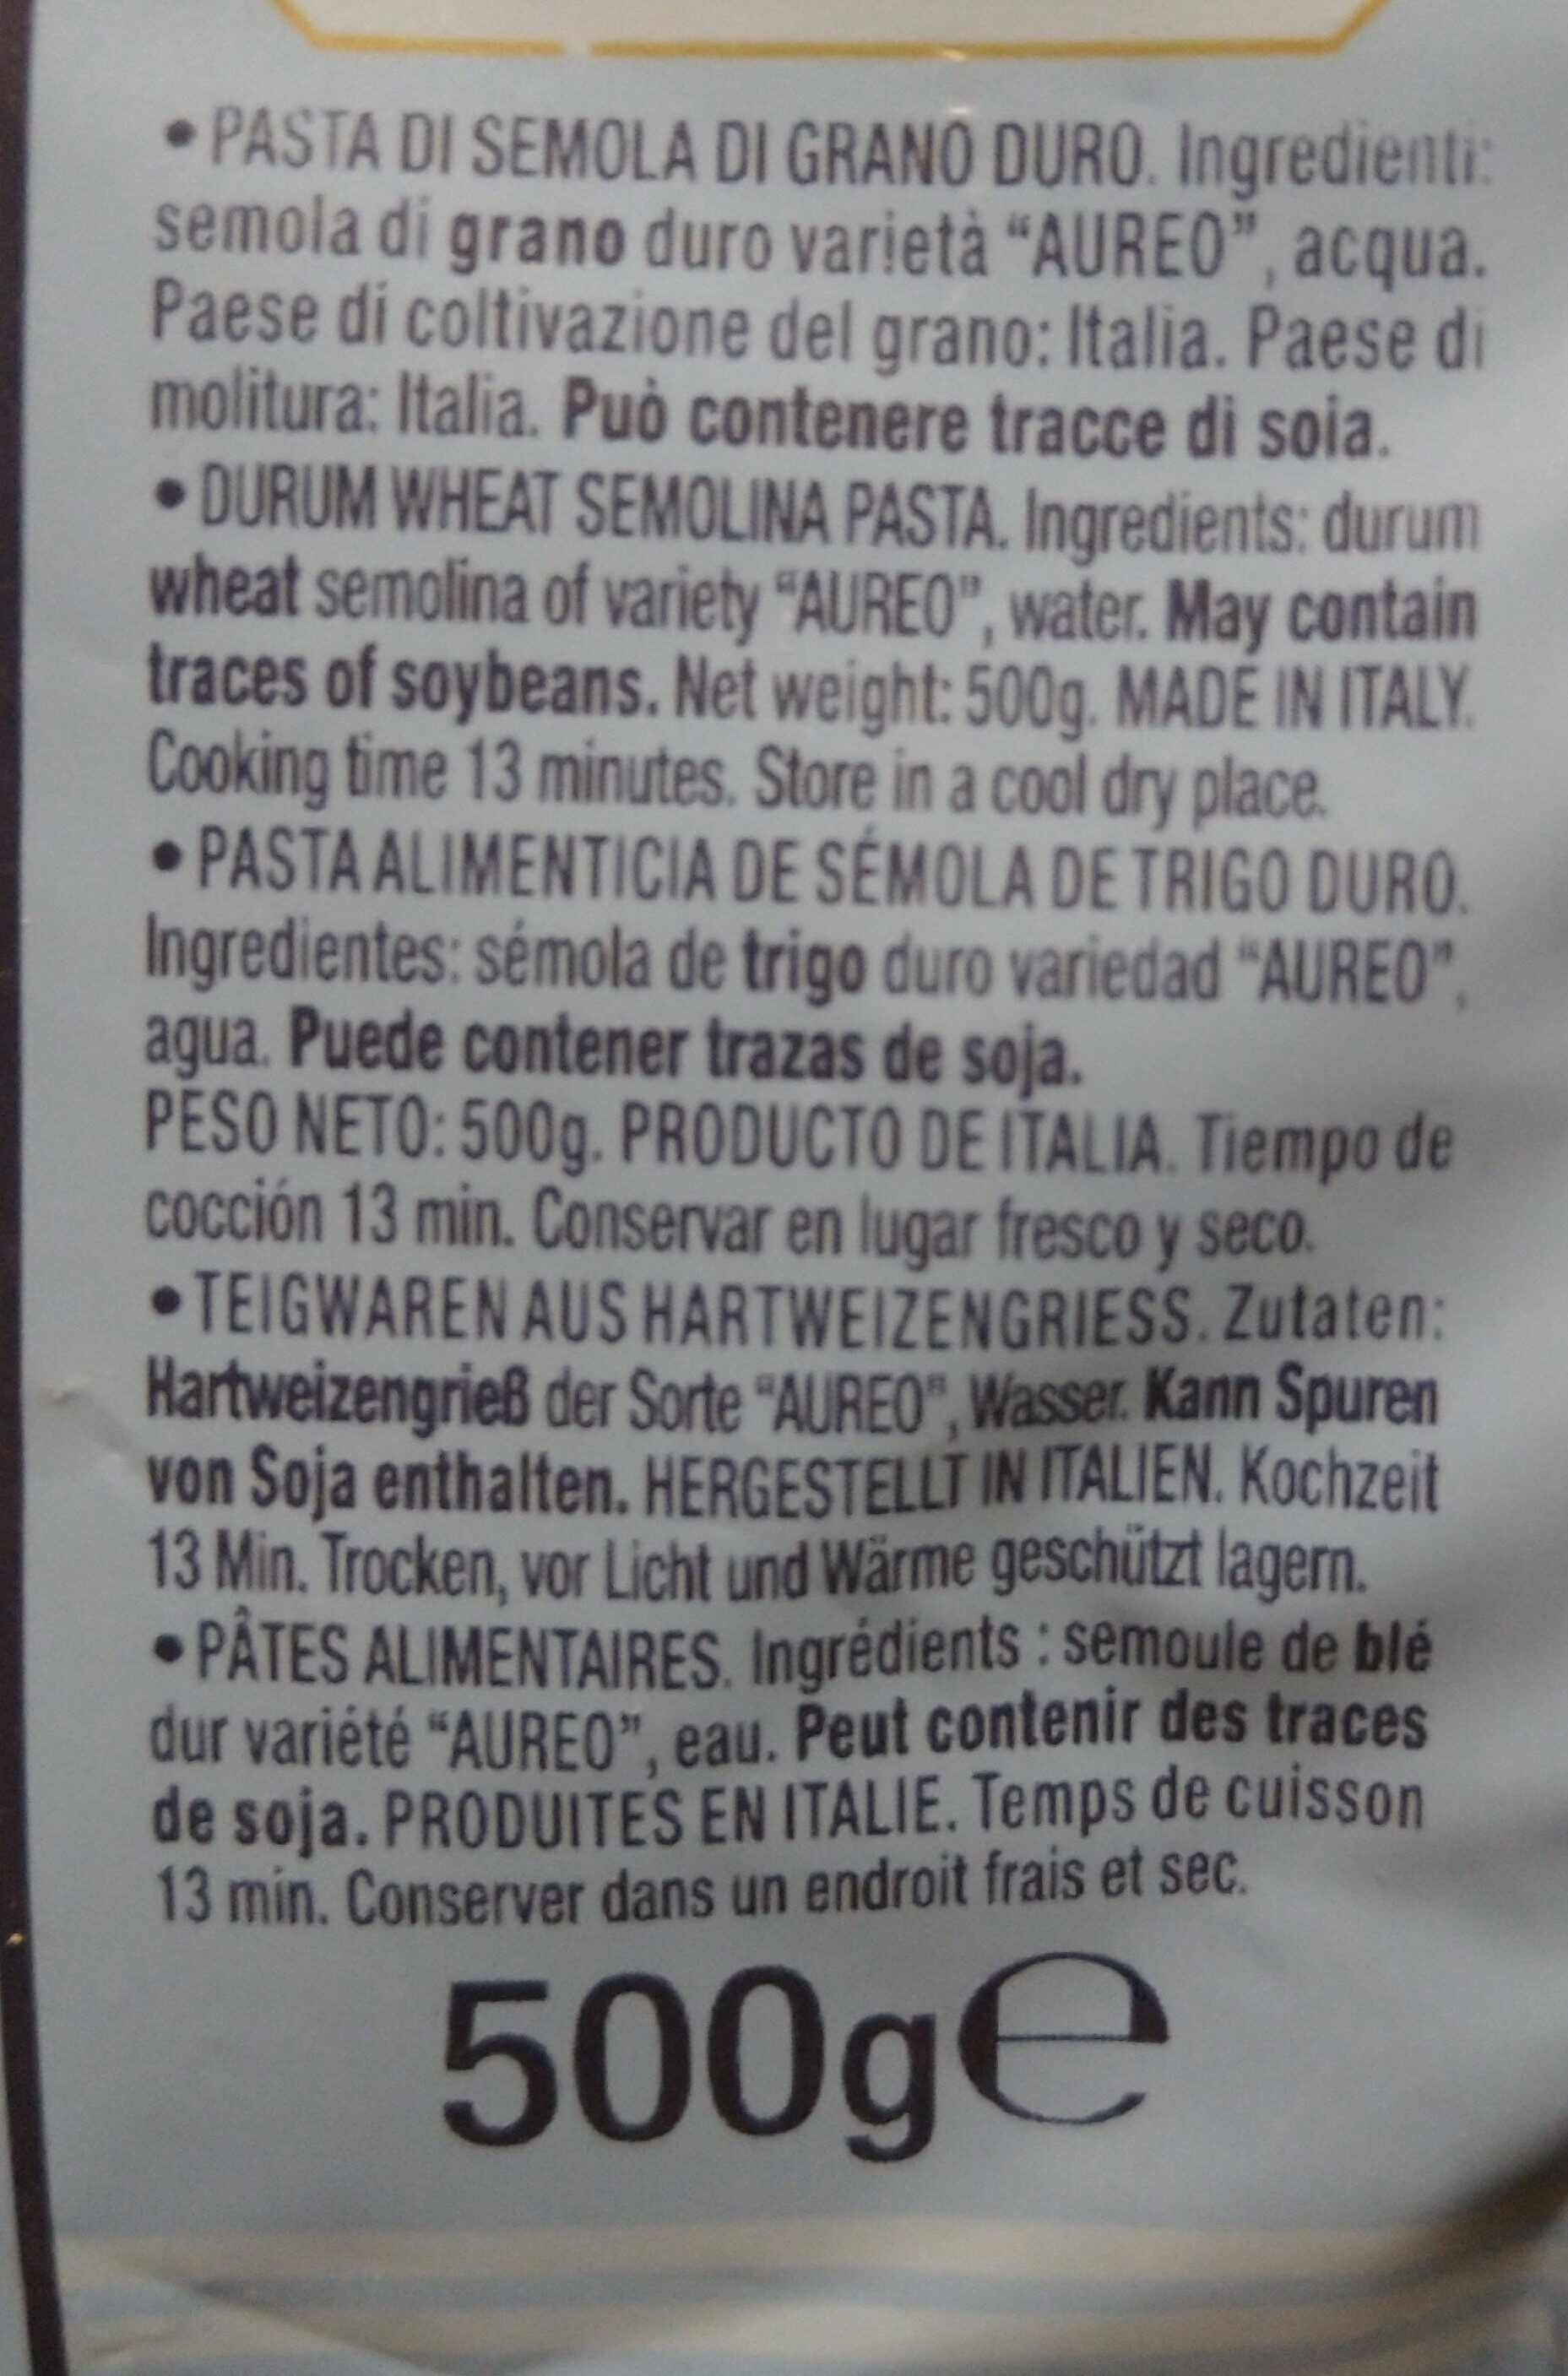 Farfalle 500g voiello 2015 - Ingredienti - it